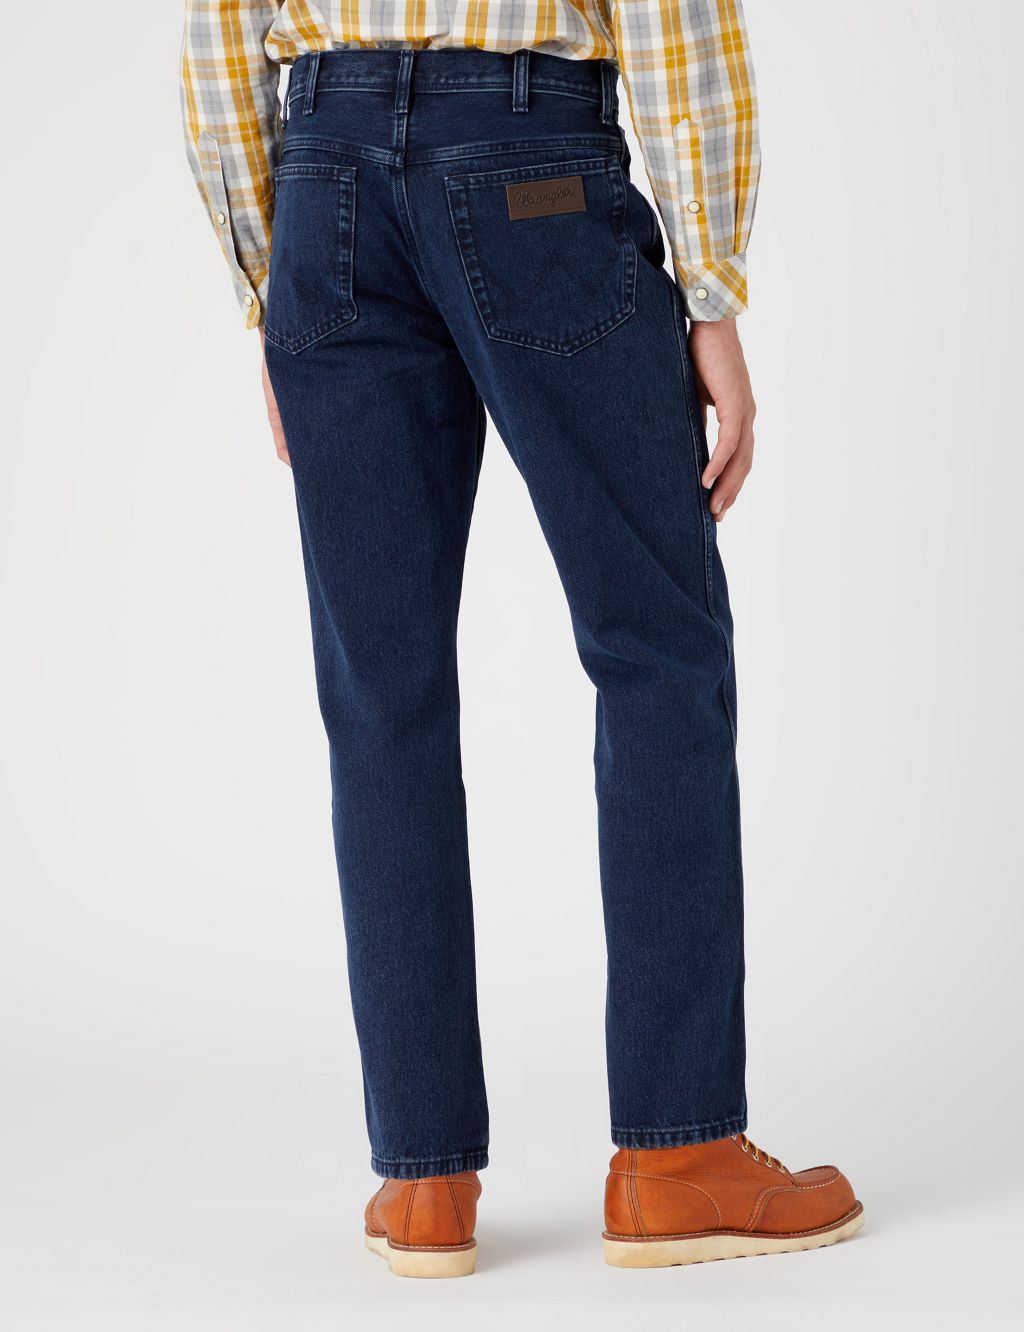 Straight Fit 5 Pocket | Wrangler Jeans | M&S